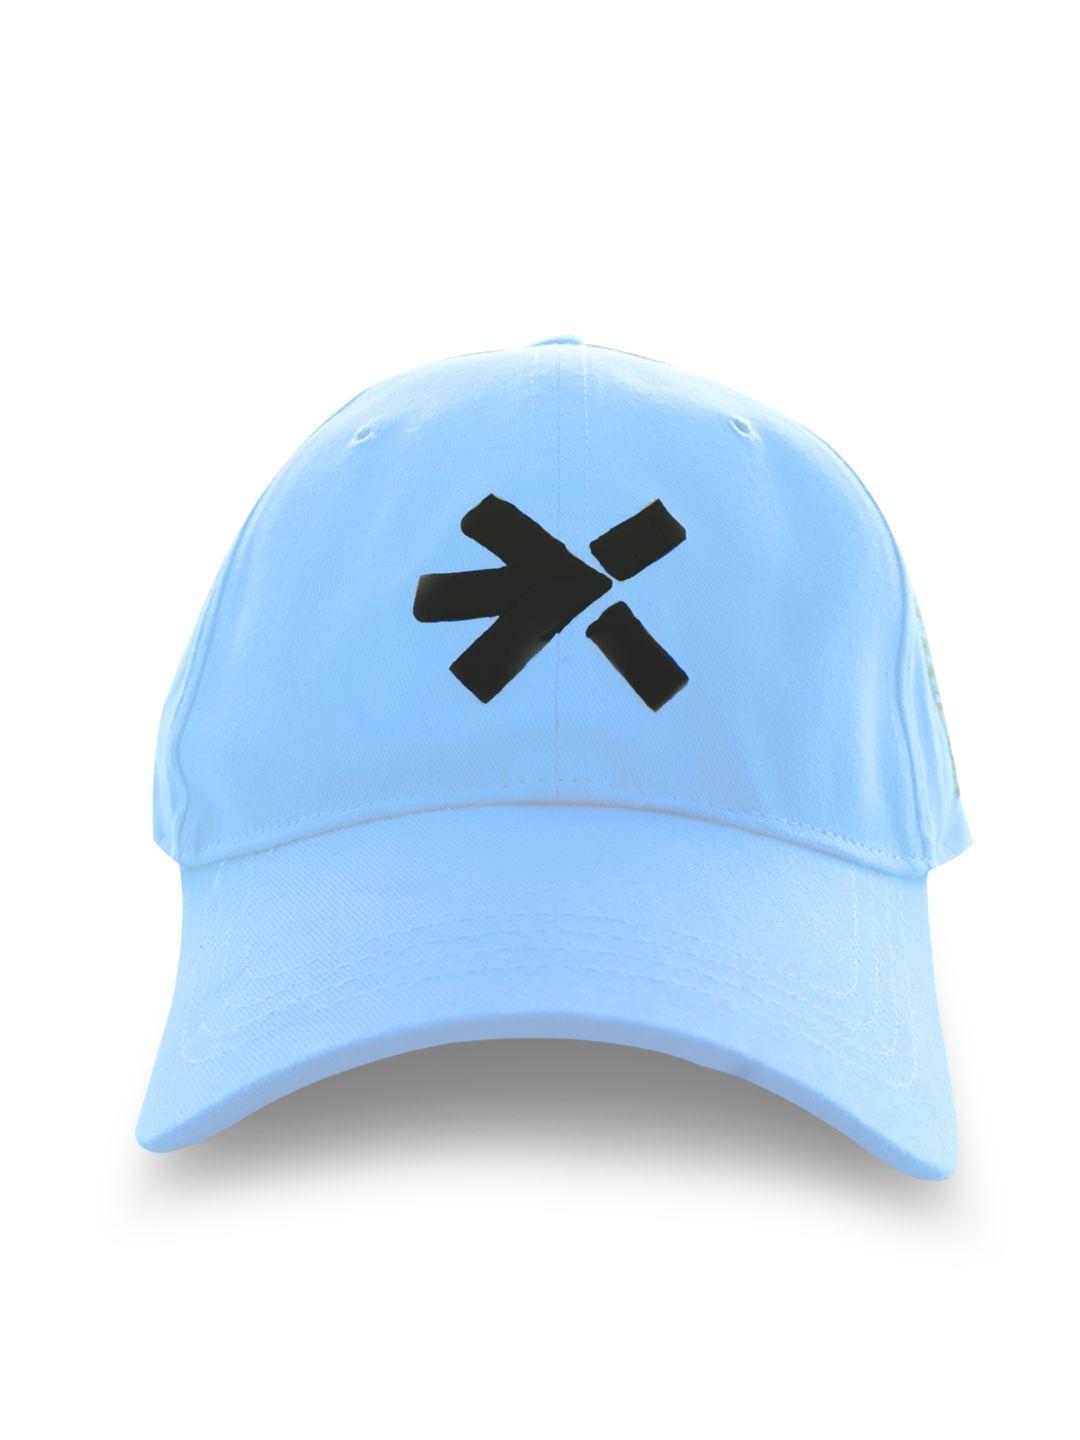 hrx by hrithik roshan unisex printed cotton baseball cap